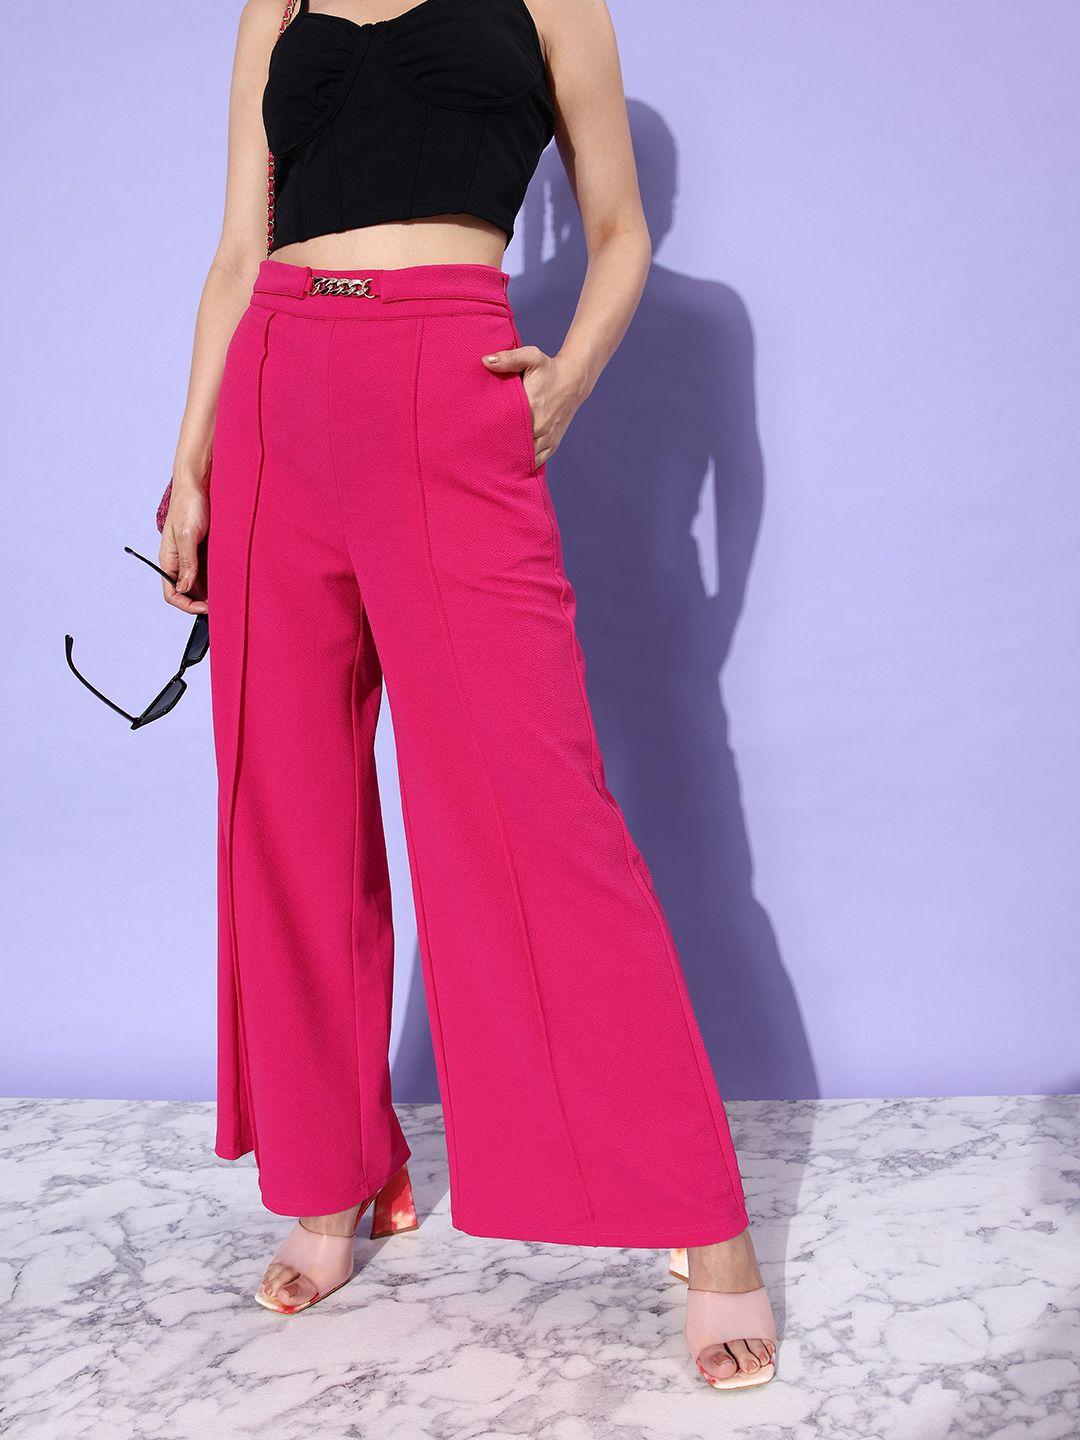 4wrd by dressberry women fuchsia pink raw mini pleated trousers